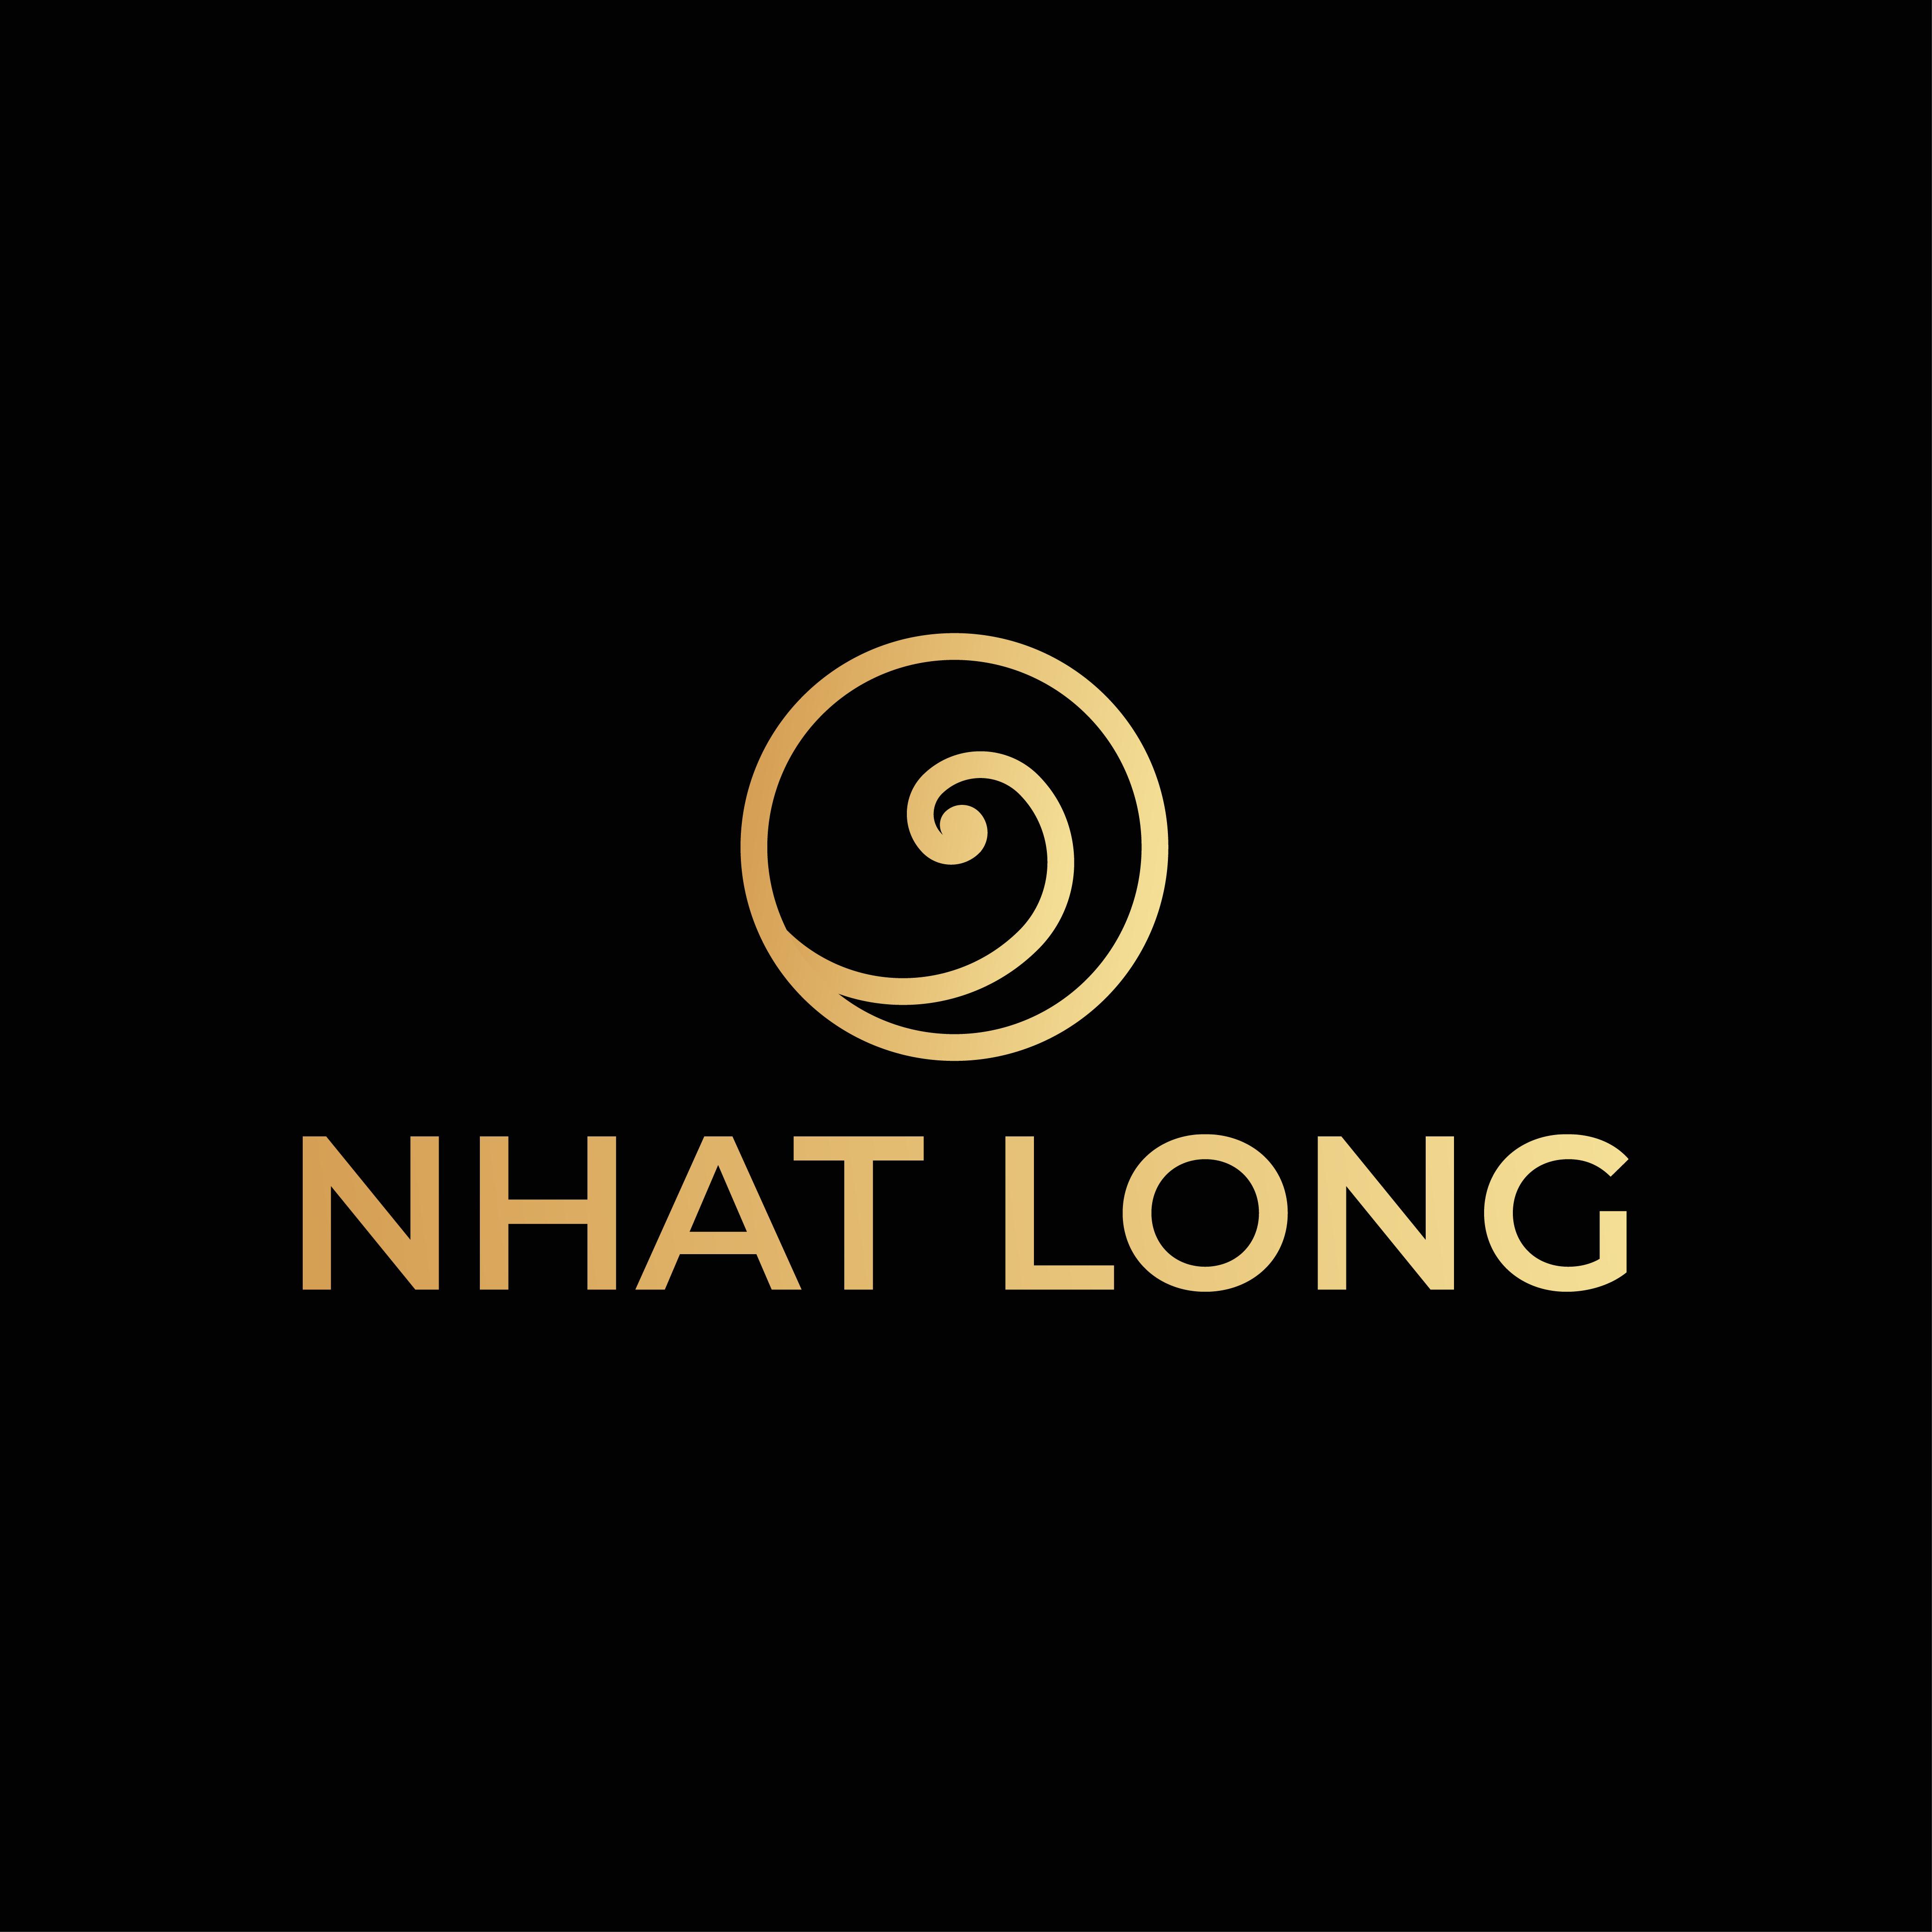 Nhat Long Restaurant in Berlin - Logo